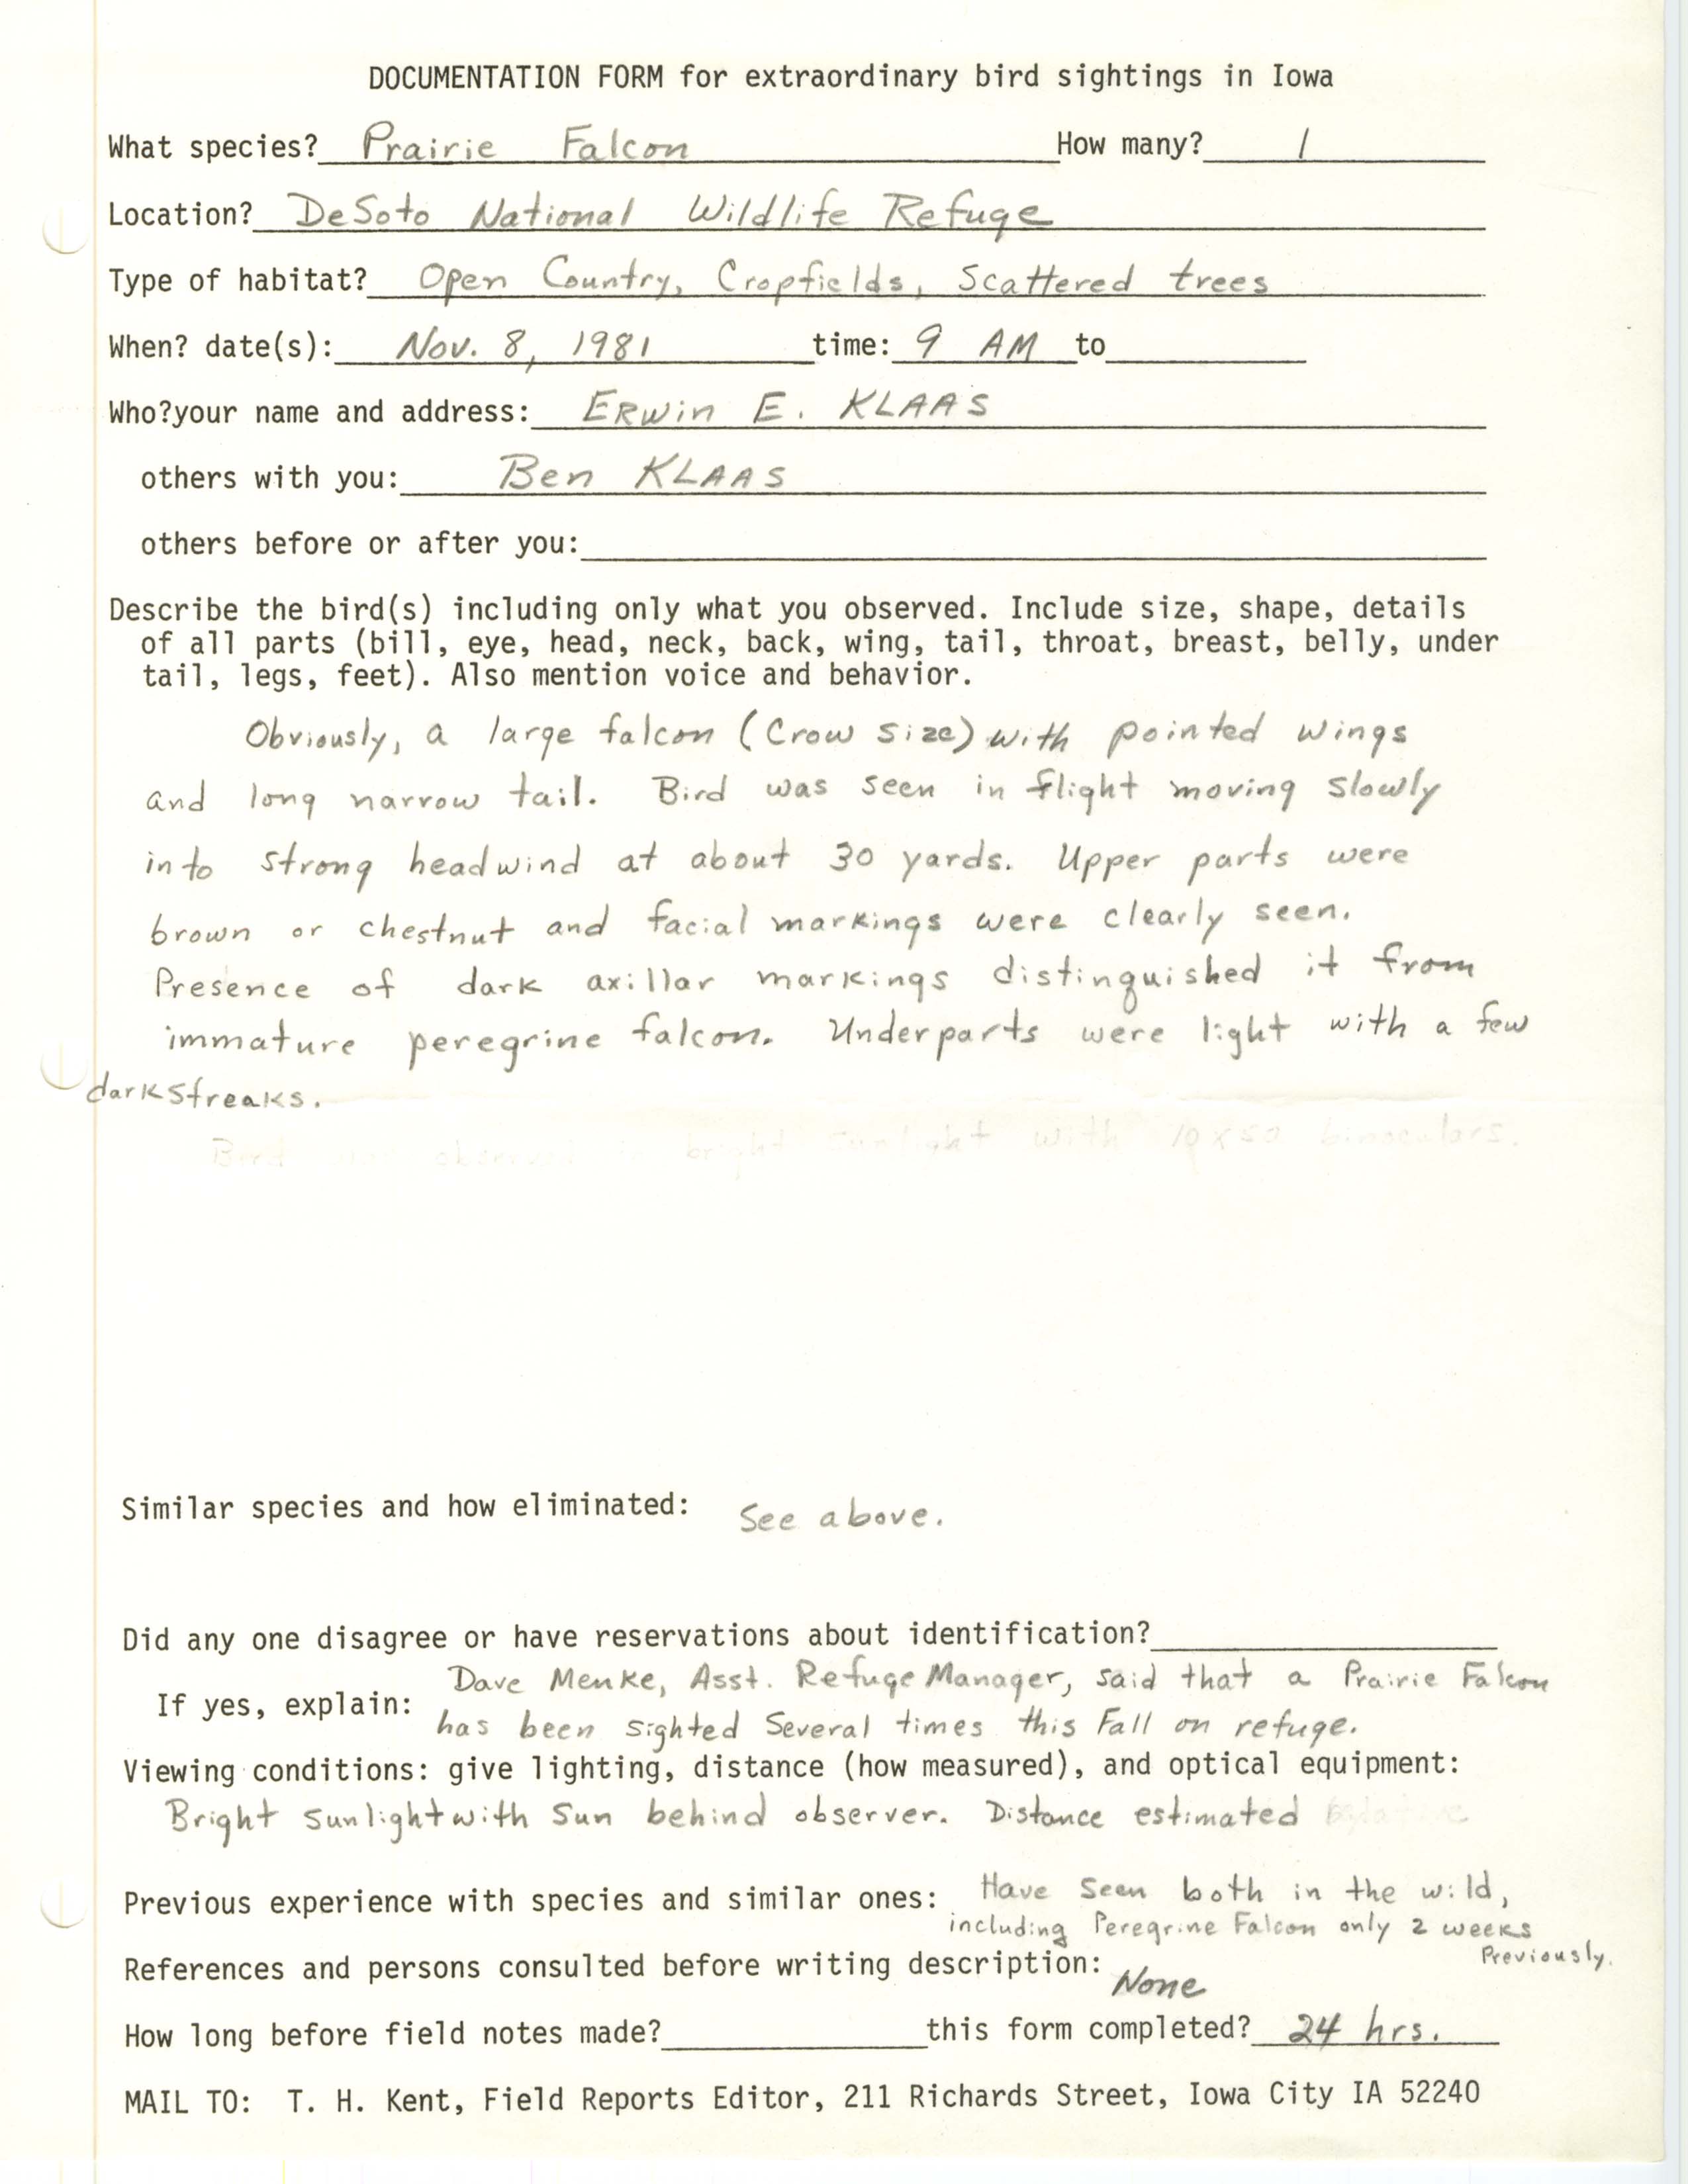 Rare bird documentation form for Prairie Falcon at DeSoto National Wildlife Refuge in 1981